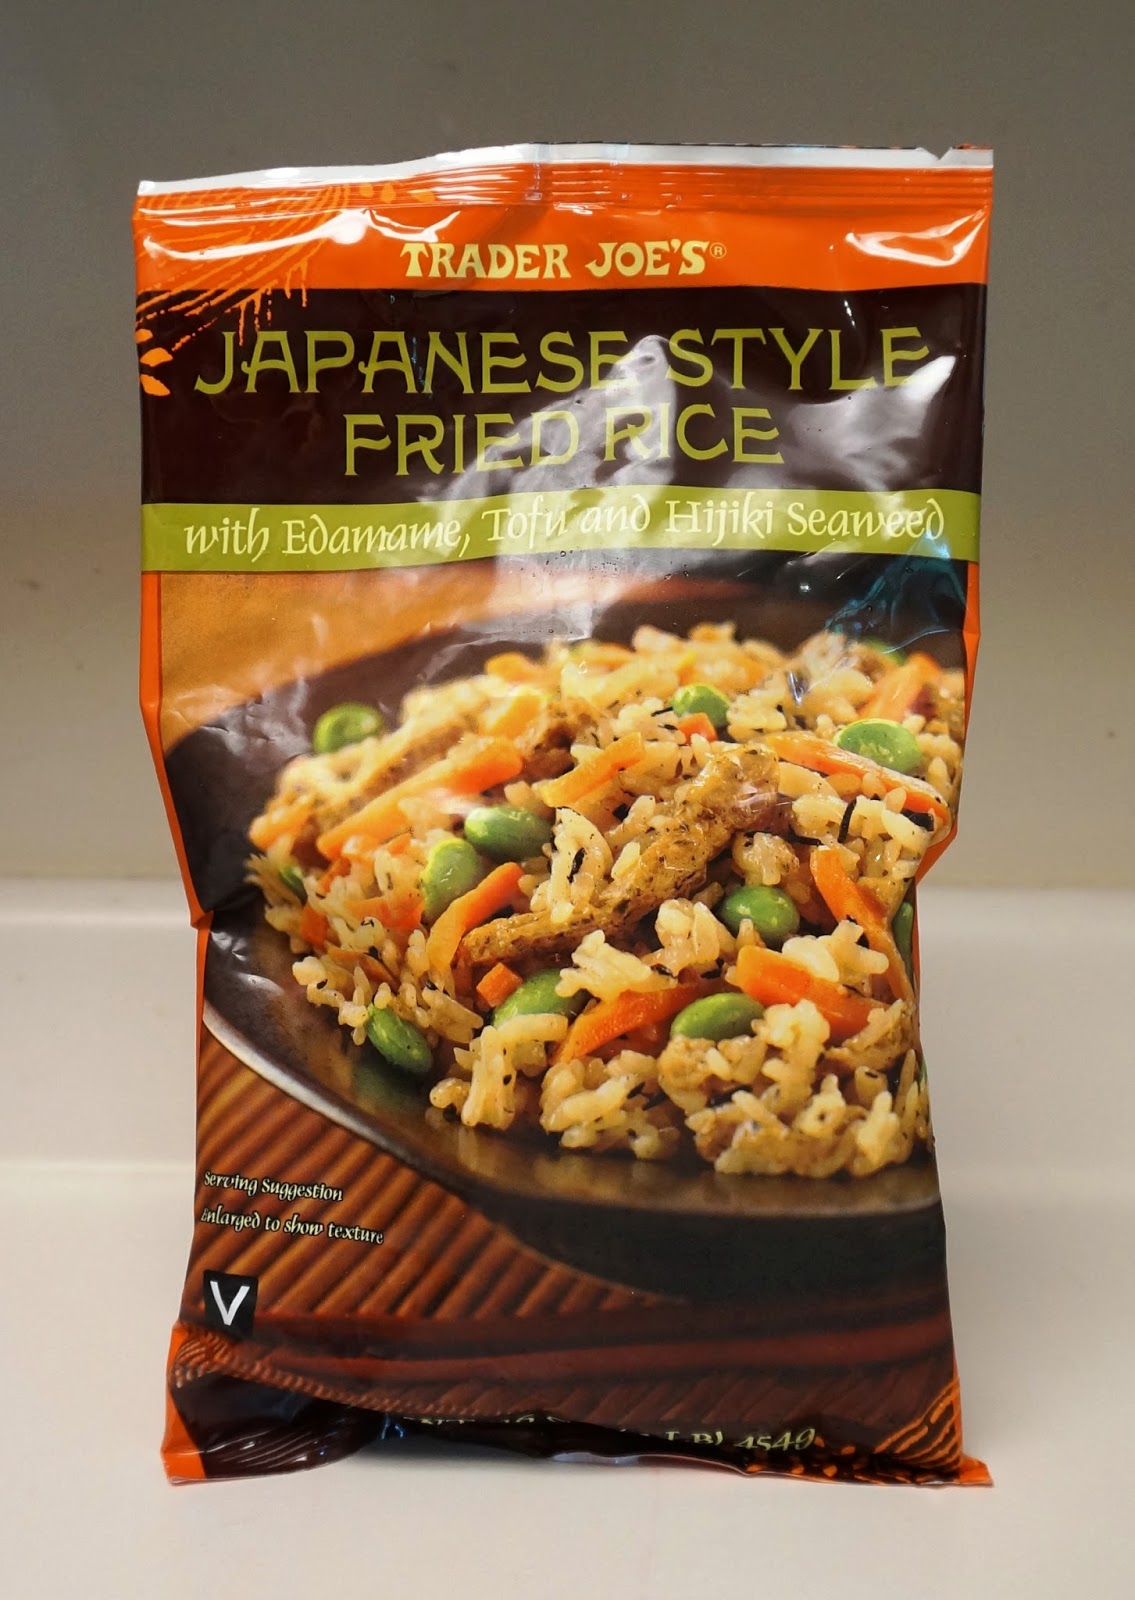 Exploring Trader Joe's: Trader Joe's Japanese Style Fried Rice With